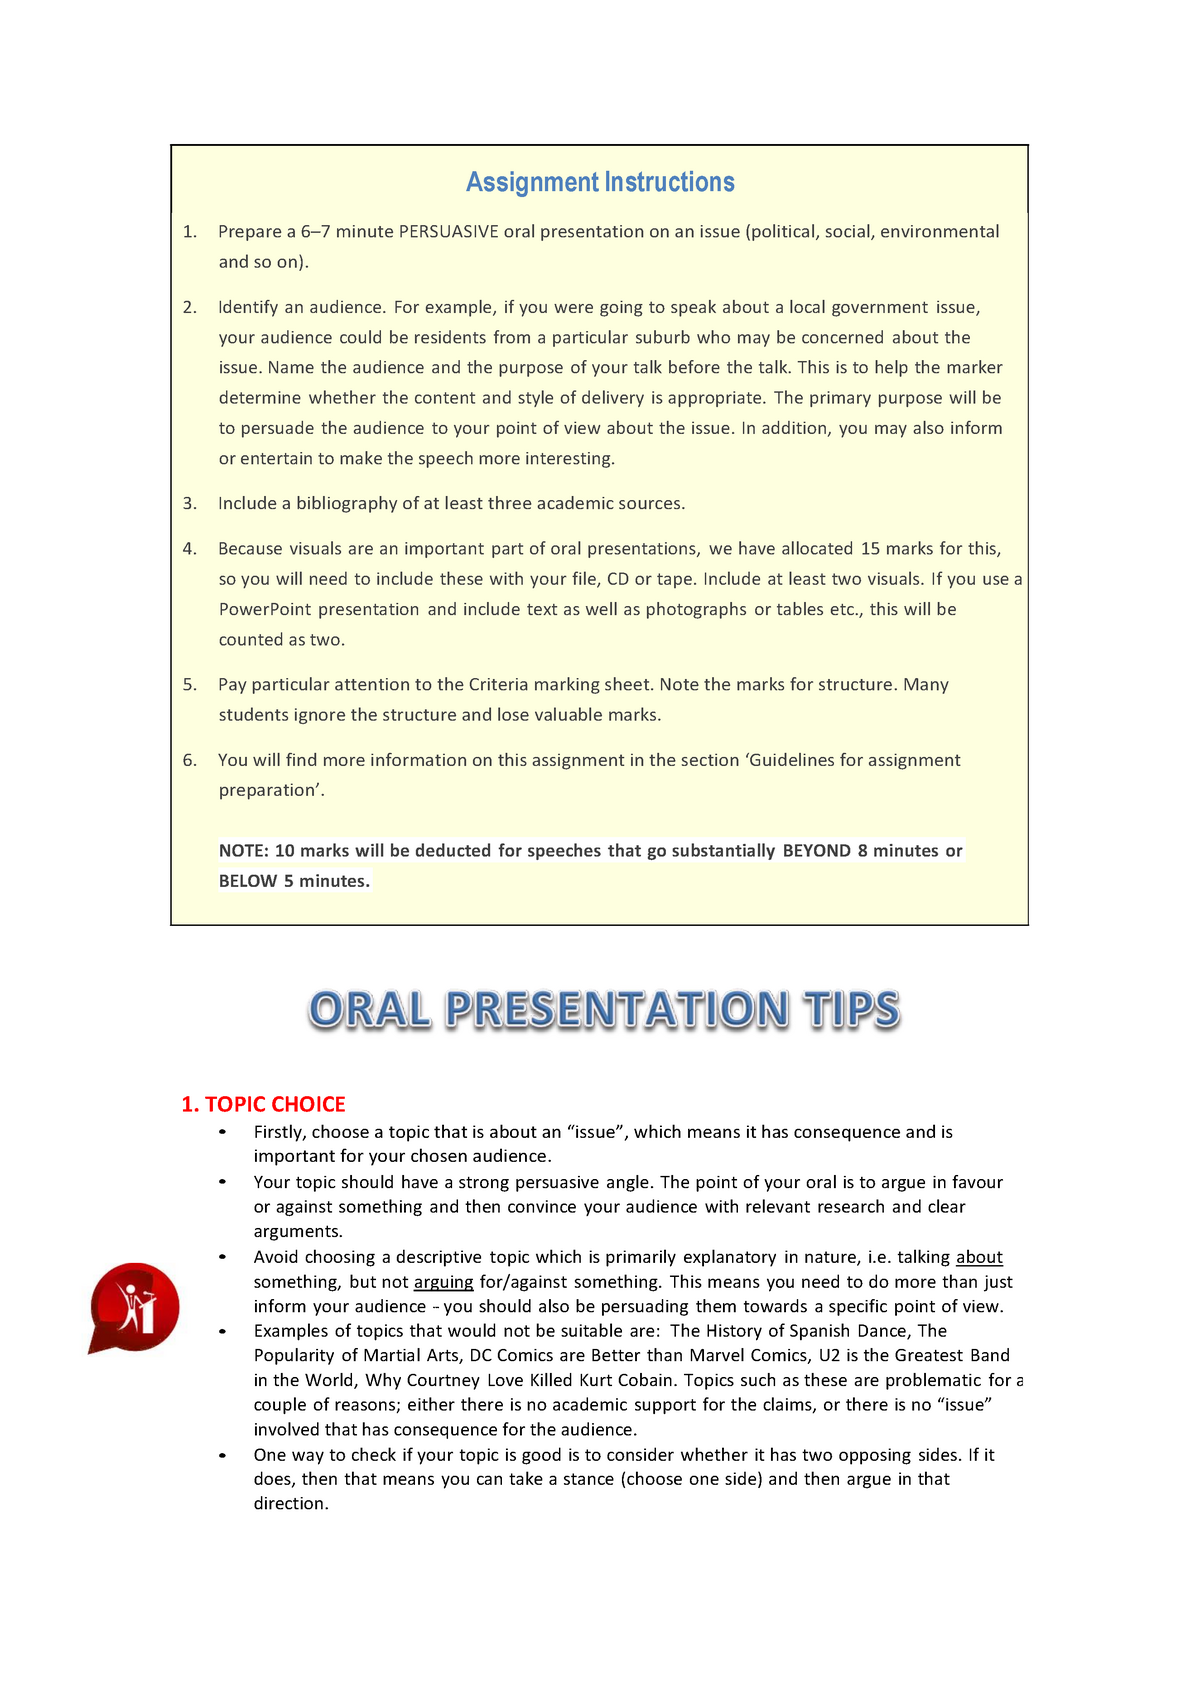 oral presentation tips pdf